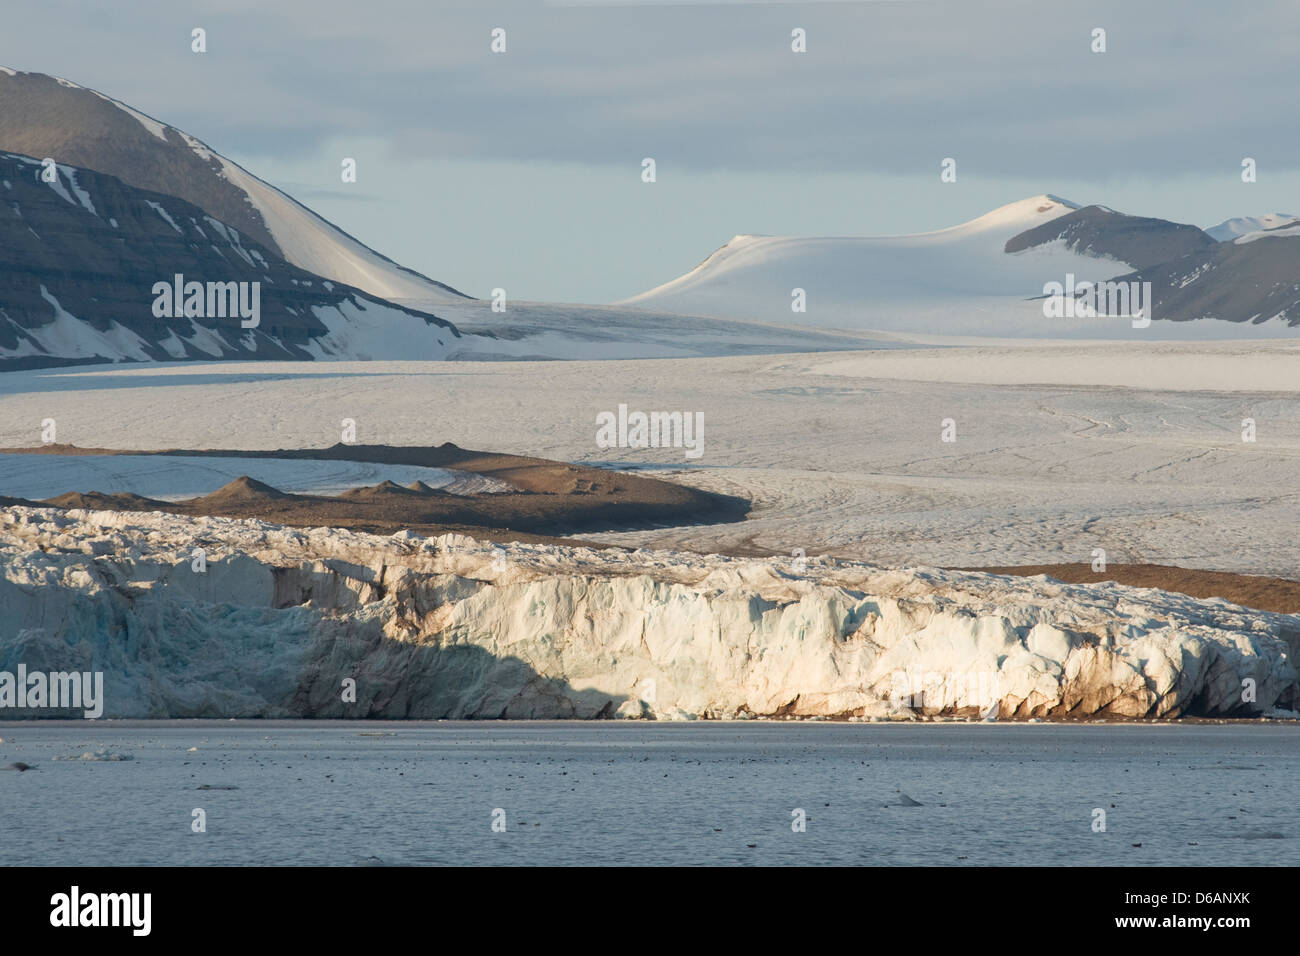 Norway, Svalbard Archipelago, Spitsbergen, Templefjorden, Tunabreen. Beautiful rugged scenery of the massive glacier Tunabreen. Stock Photo